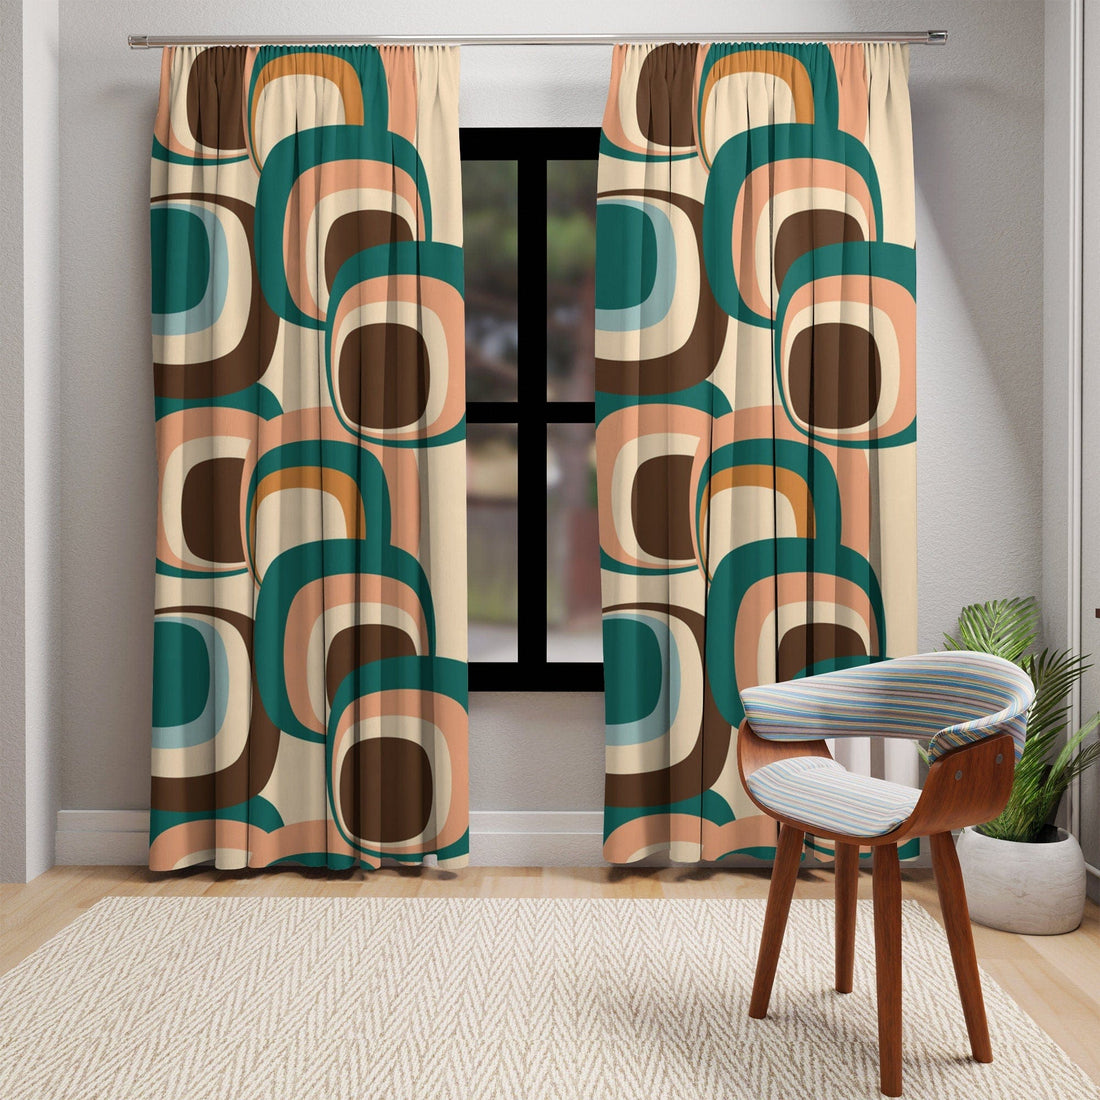 Kate McEnroe New York 60s, 70s Mid Century Modern Retro Geometric Window Curtains, Green, Blue, Brown, Beige MCM Curtain Panels, Living Room, Bedroom Drapes GiftsWindow CurtainsW3S - RET - GEO - SH7